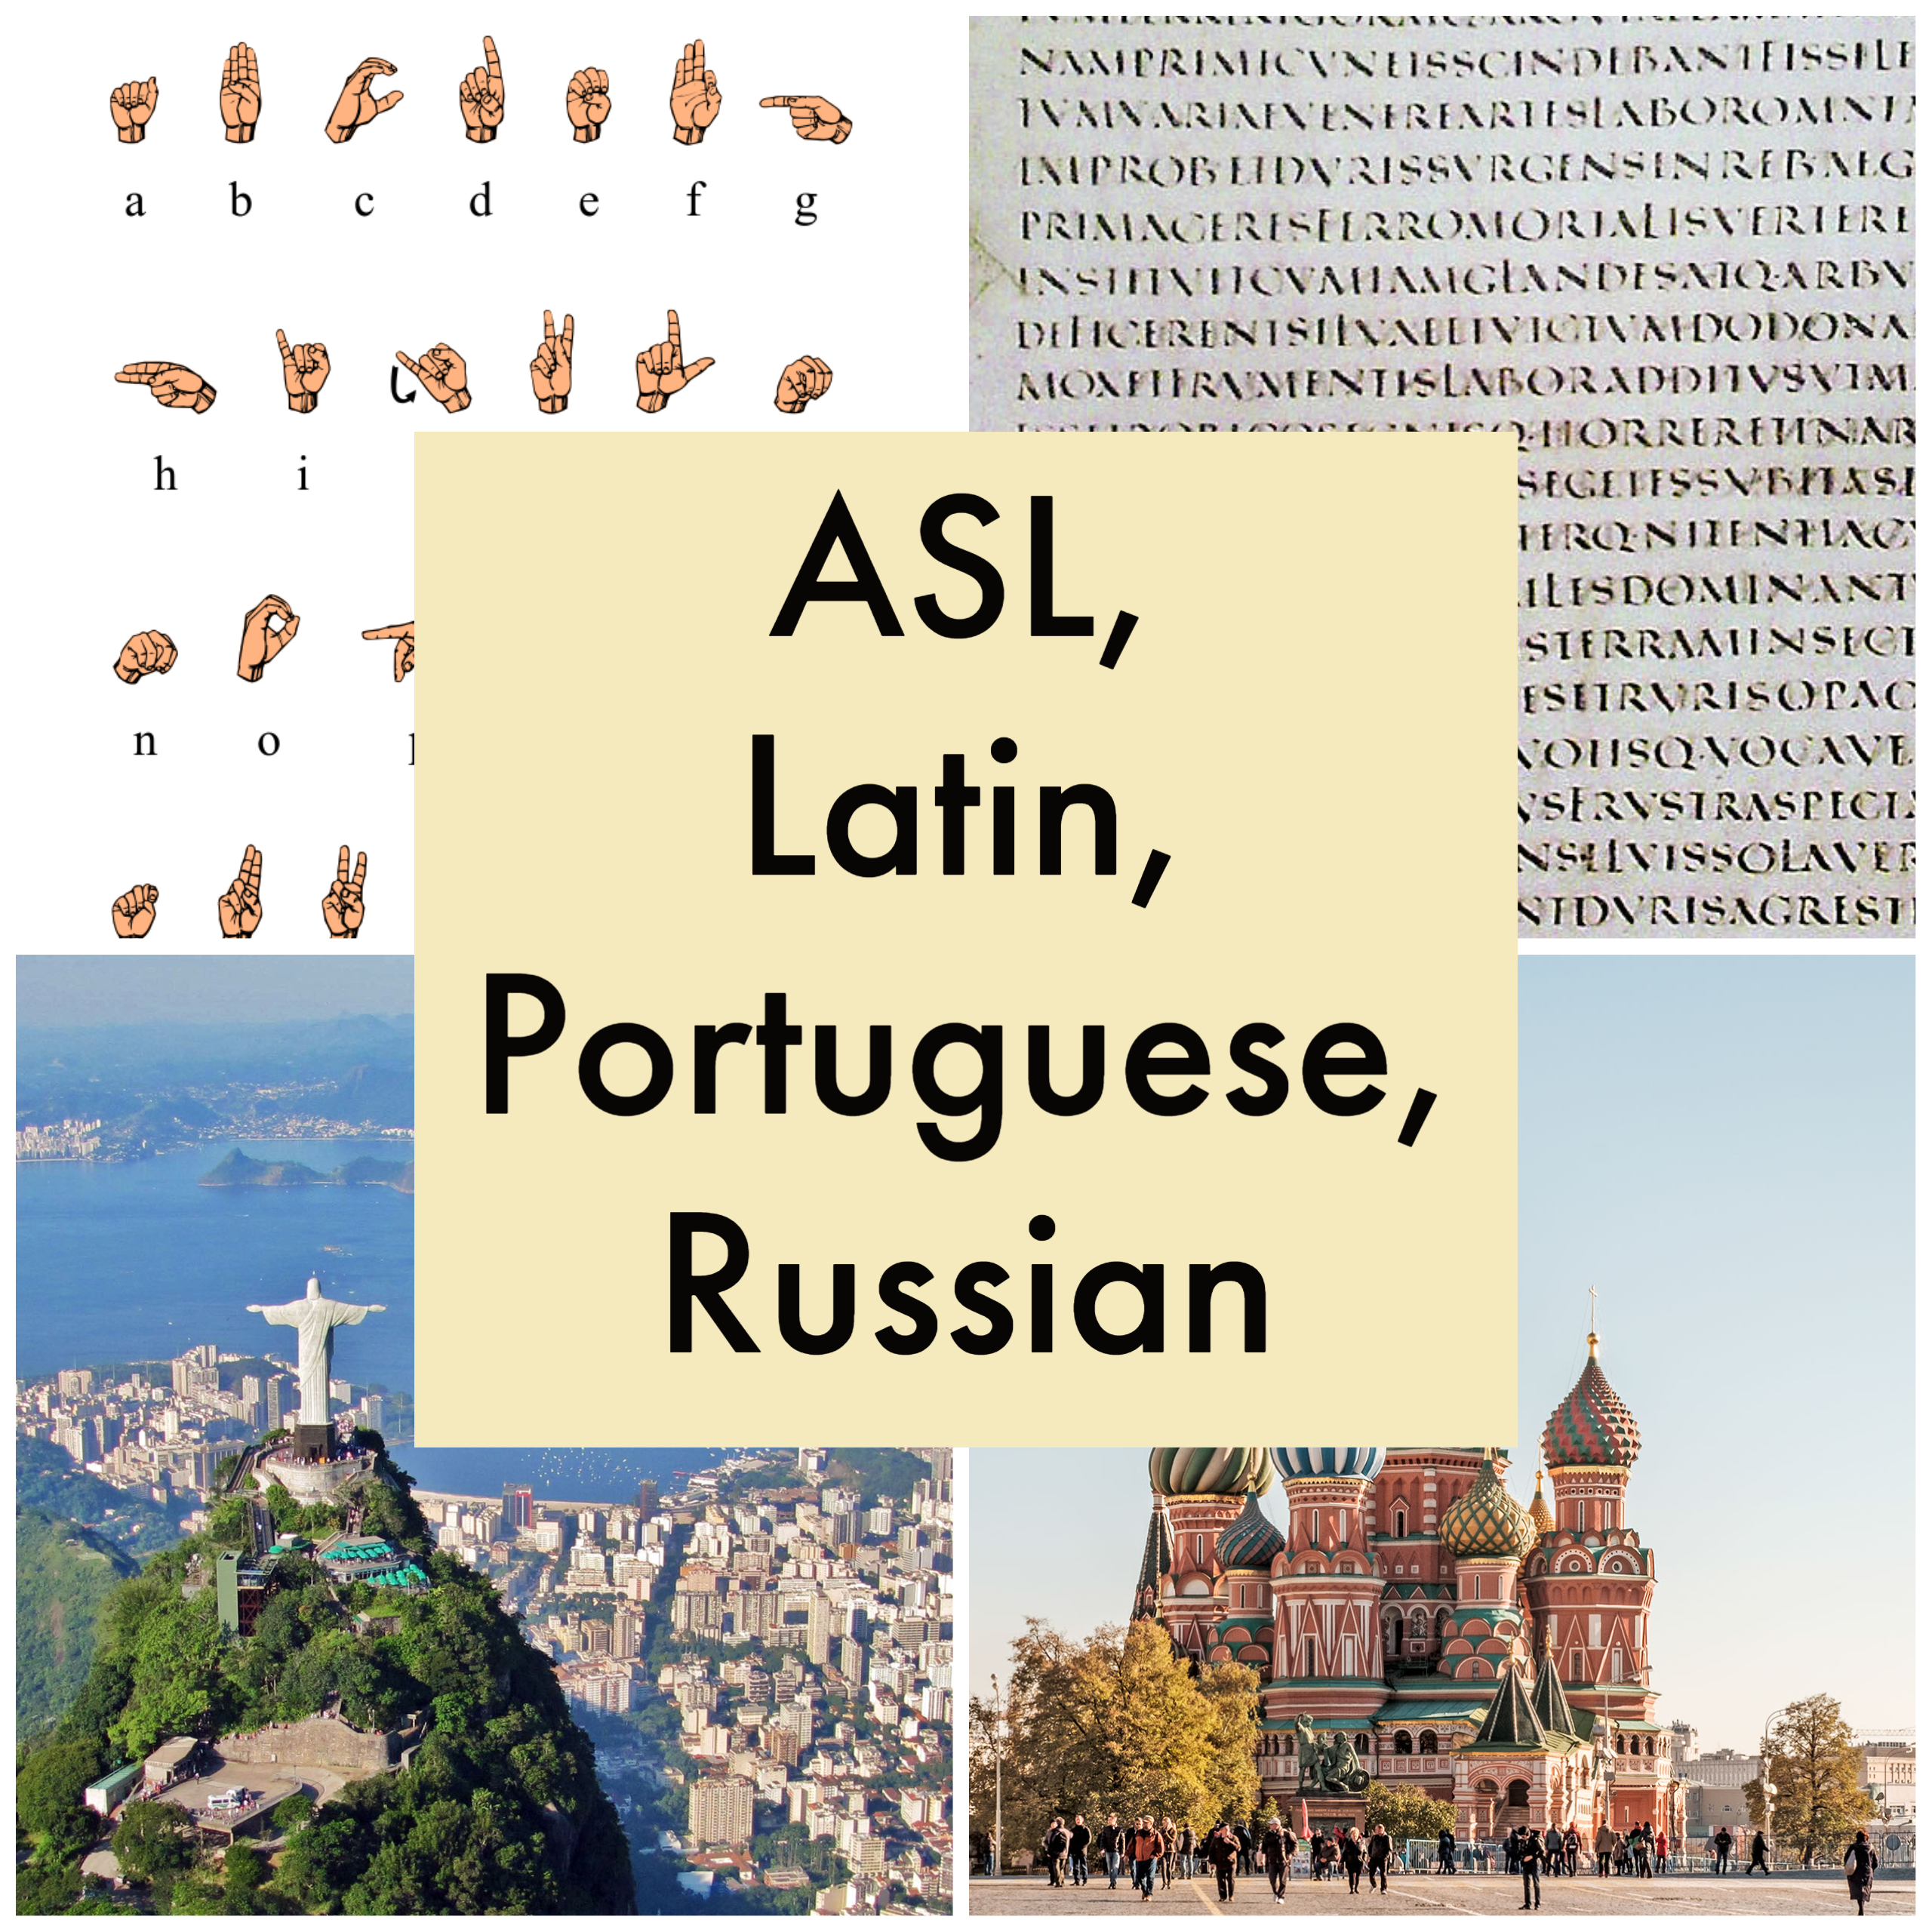 Text: ASL, Latin, Portuguese, Russian